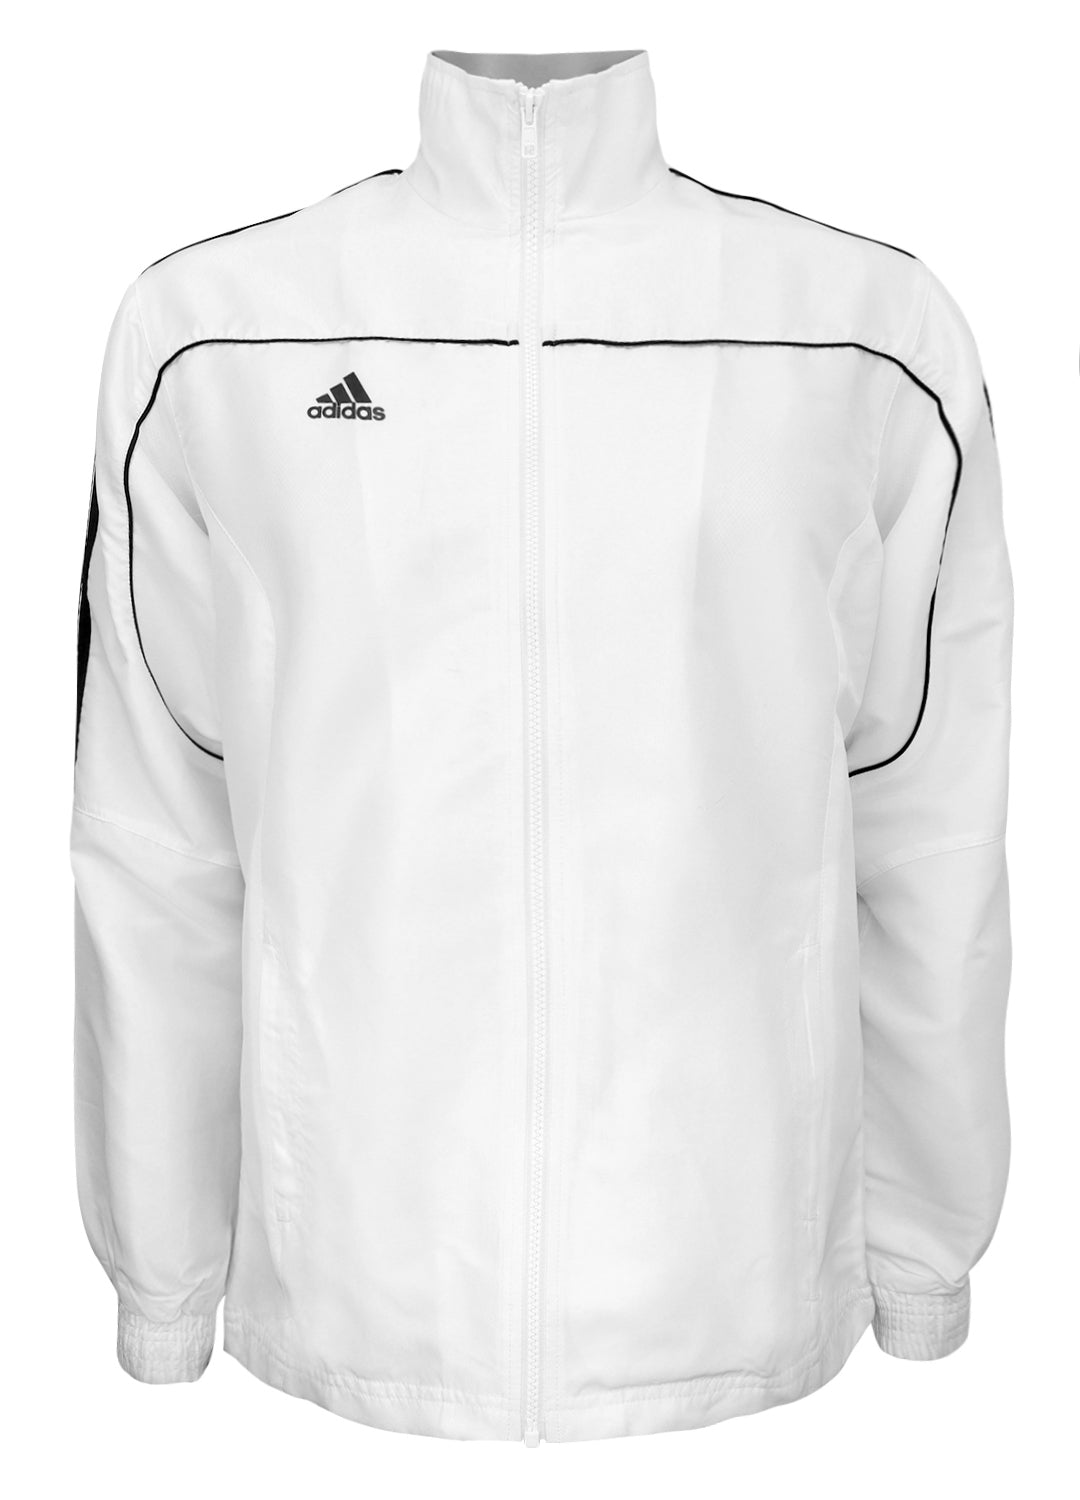 adidas jacket black with white stripes